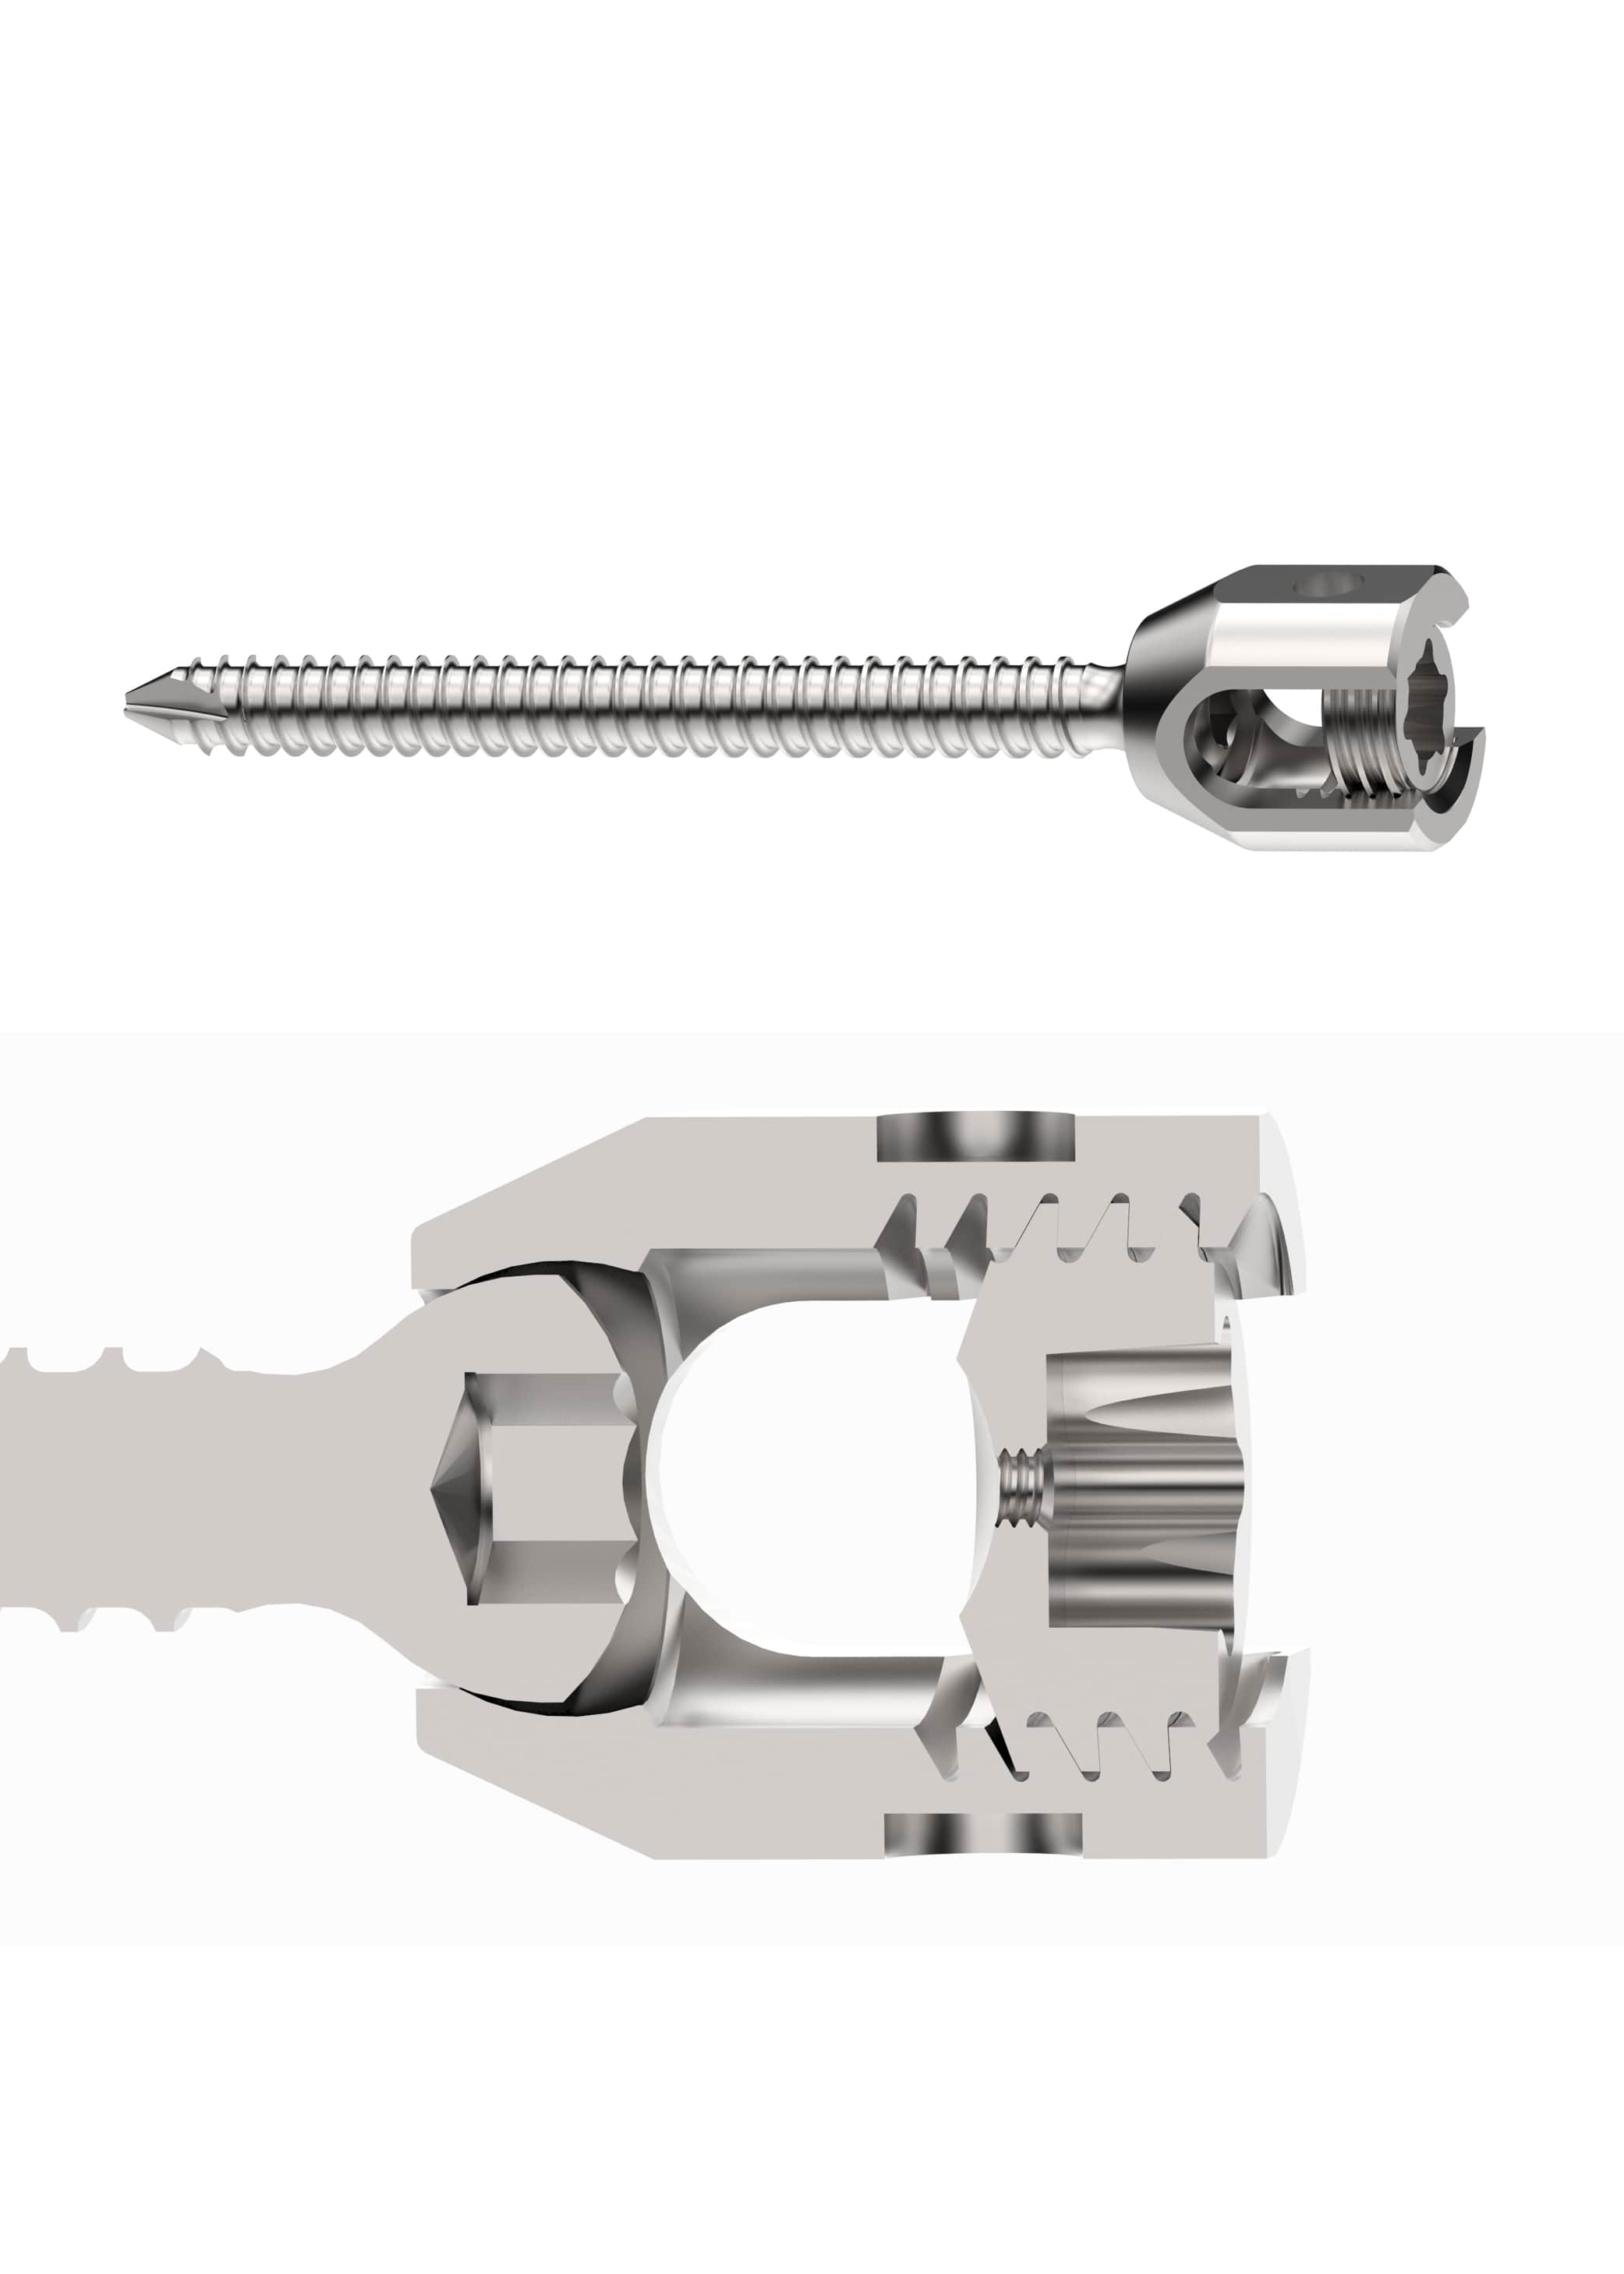 pedicle screw